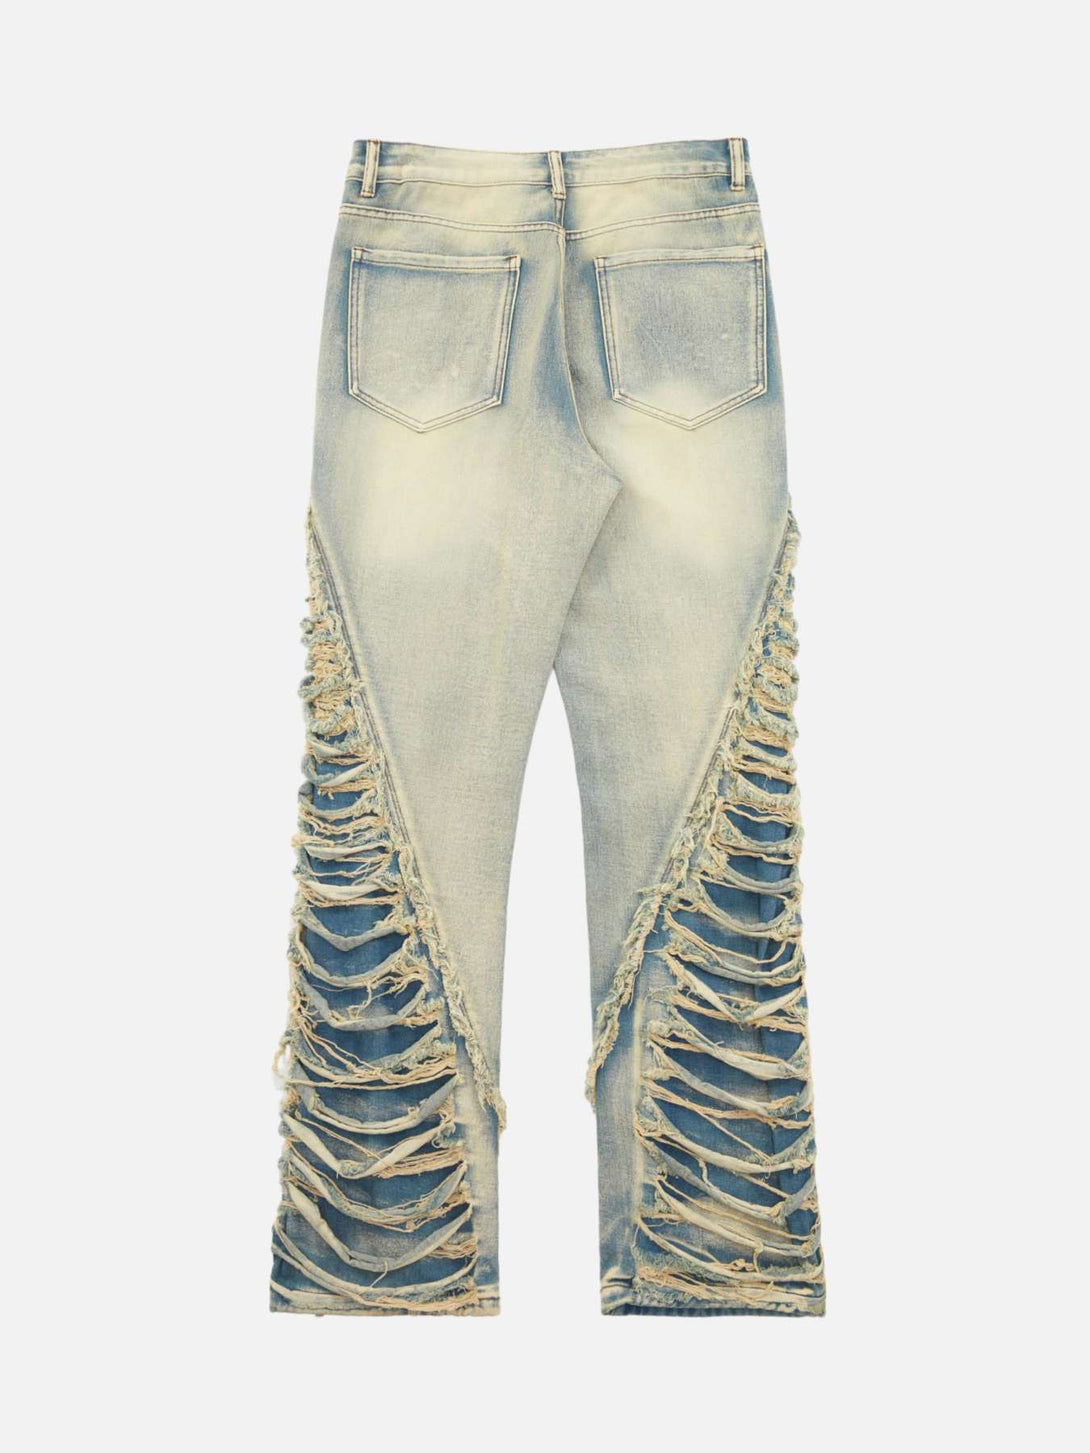 Majesda® - Ripped Double Straight Jeans- Outfit Ideas - Streetwear Fashion - majesda.com